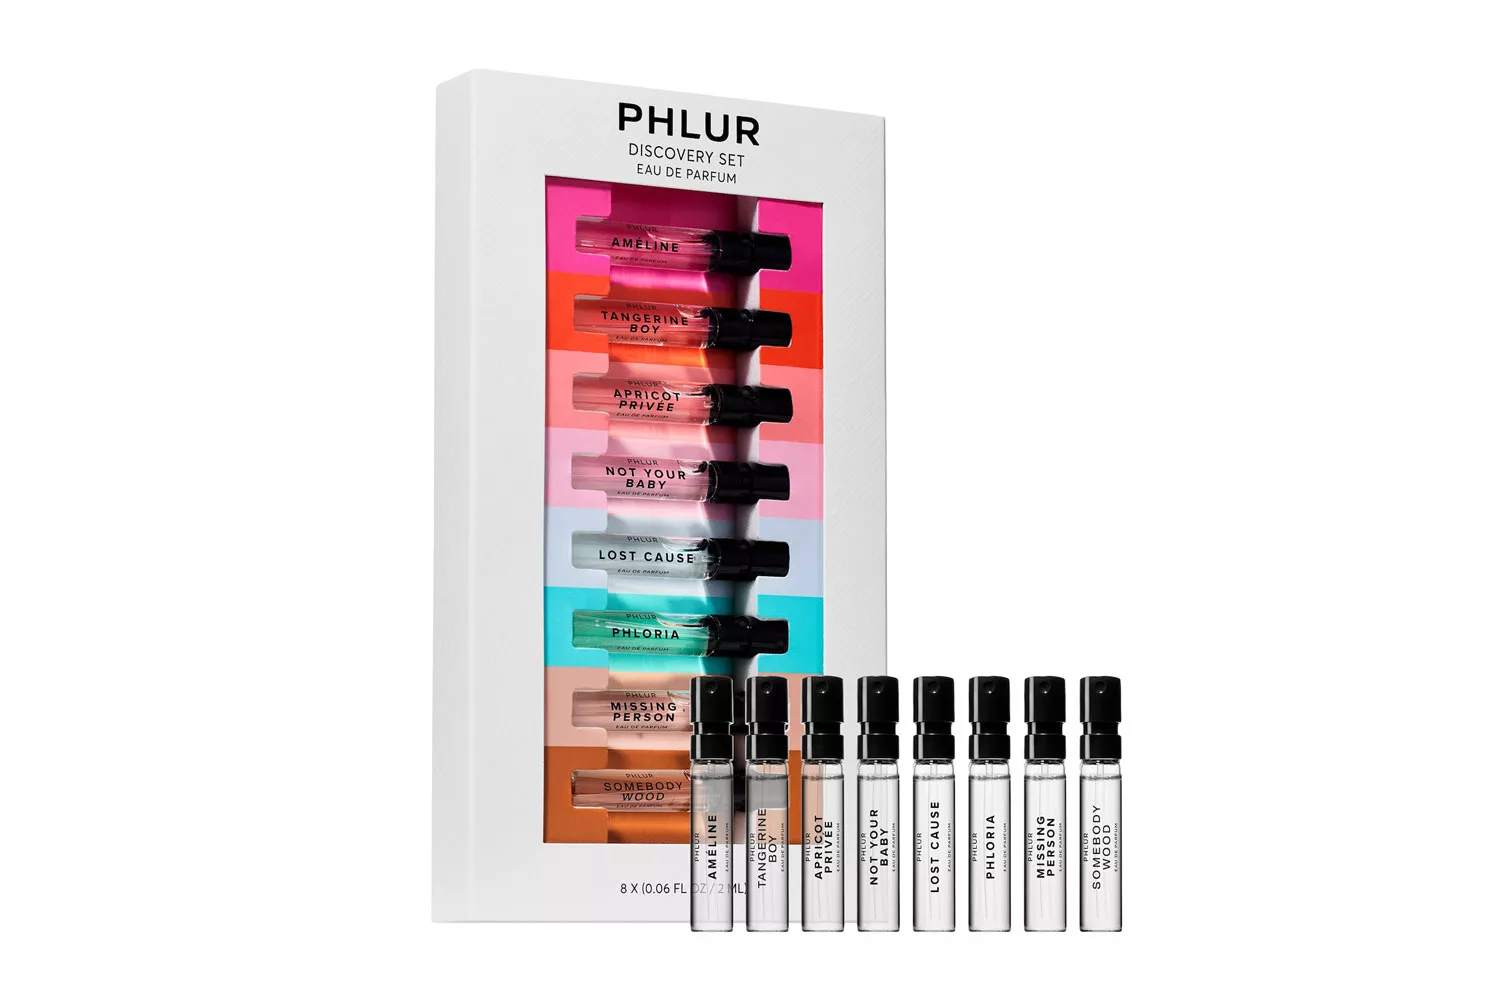 PHLUR Perfume Sampler Set